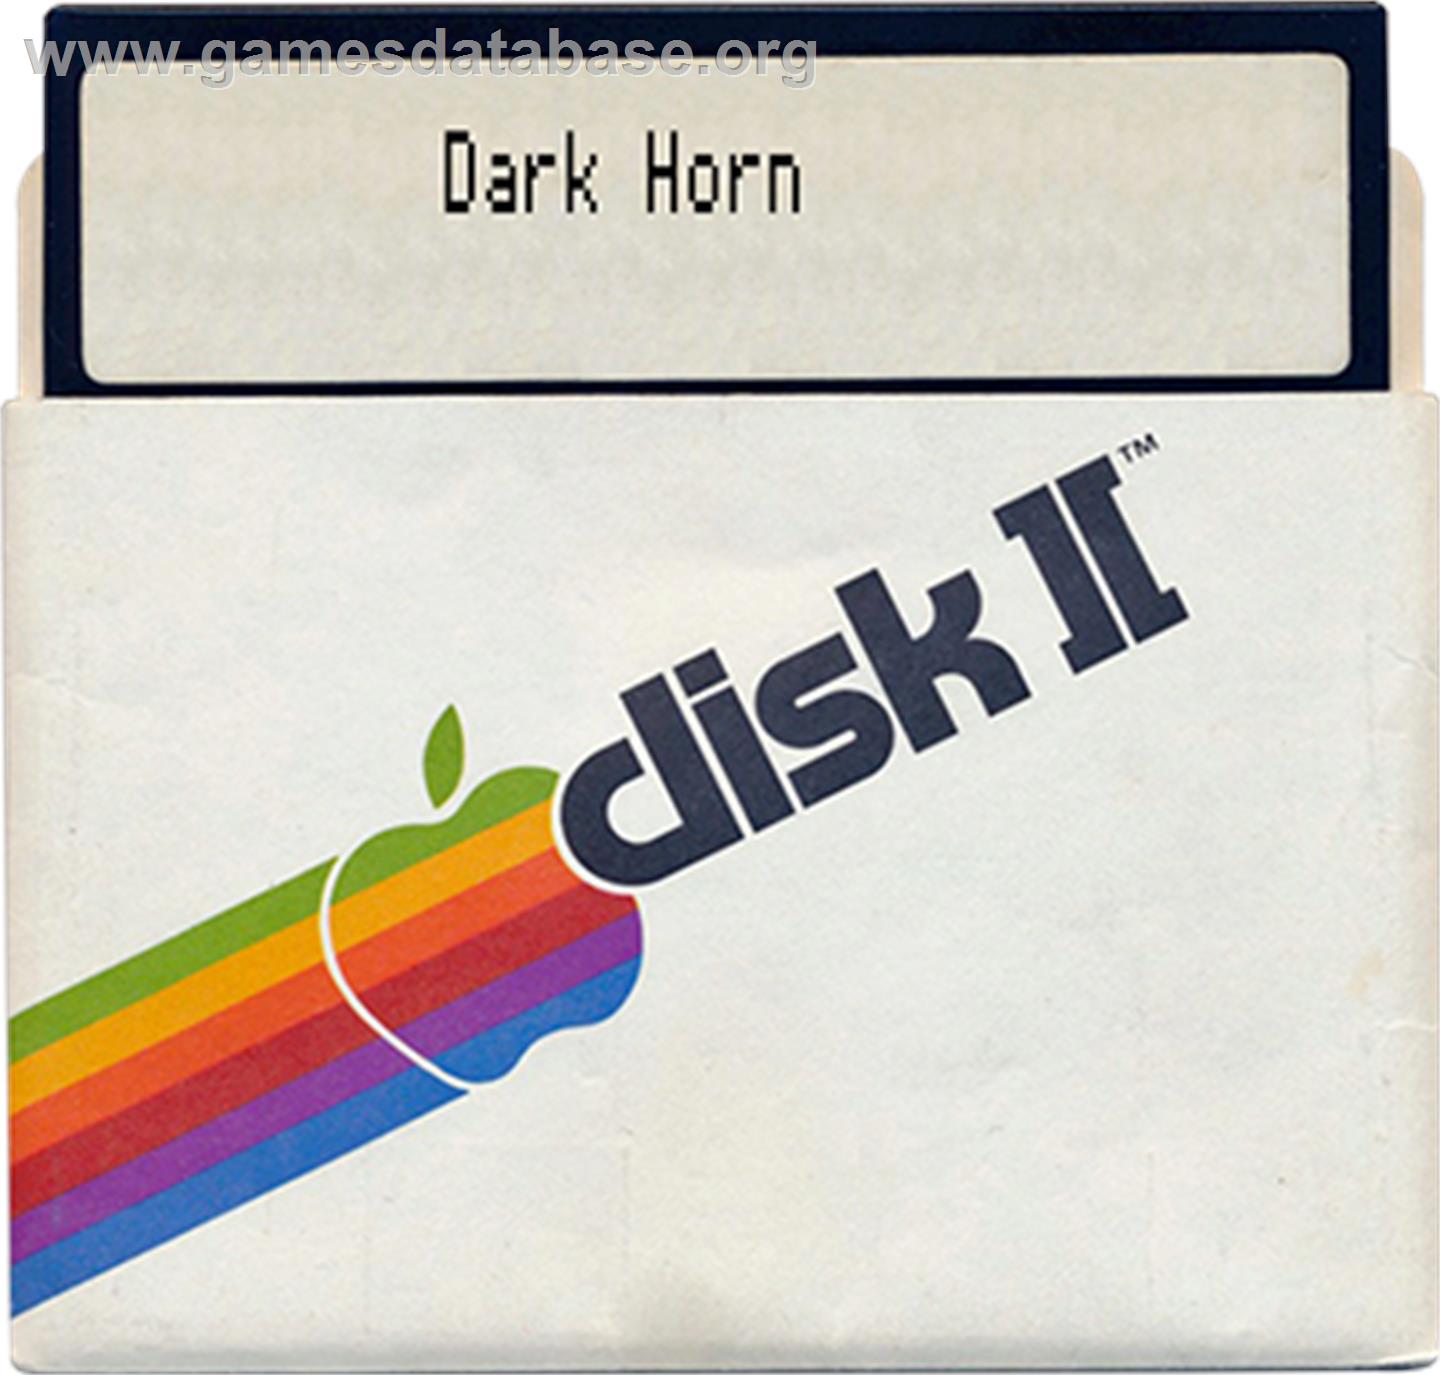 Darkhorn - Apple II - Artwork - Disc